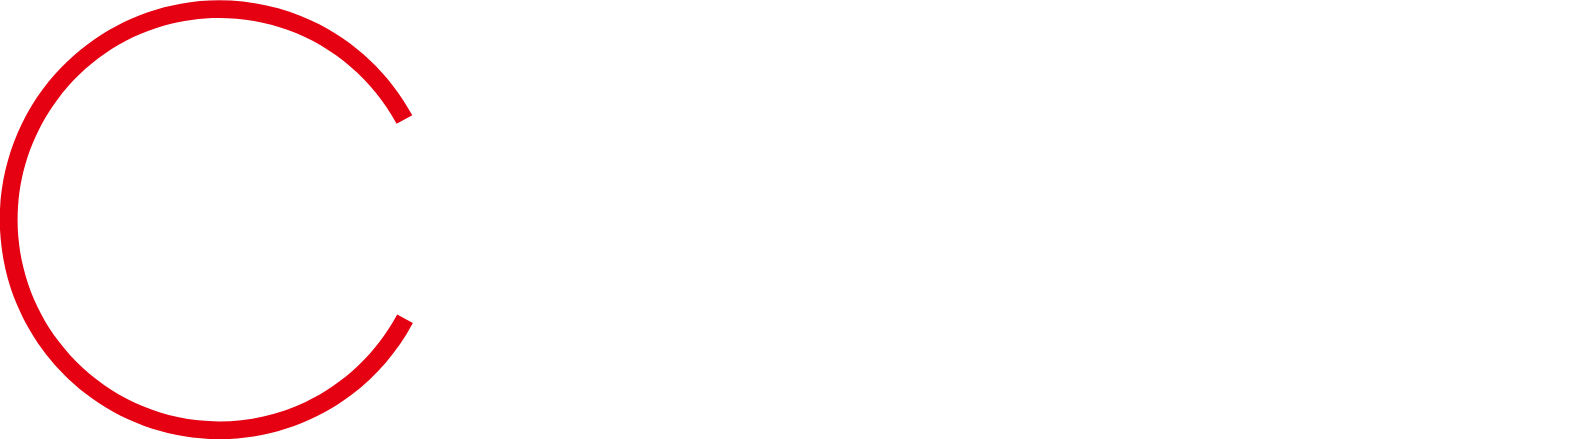 Full Truck Alliance logo large for dark backgrounds (transparent PNG)